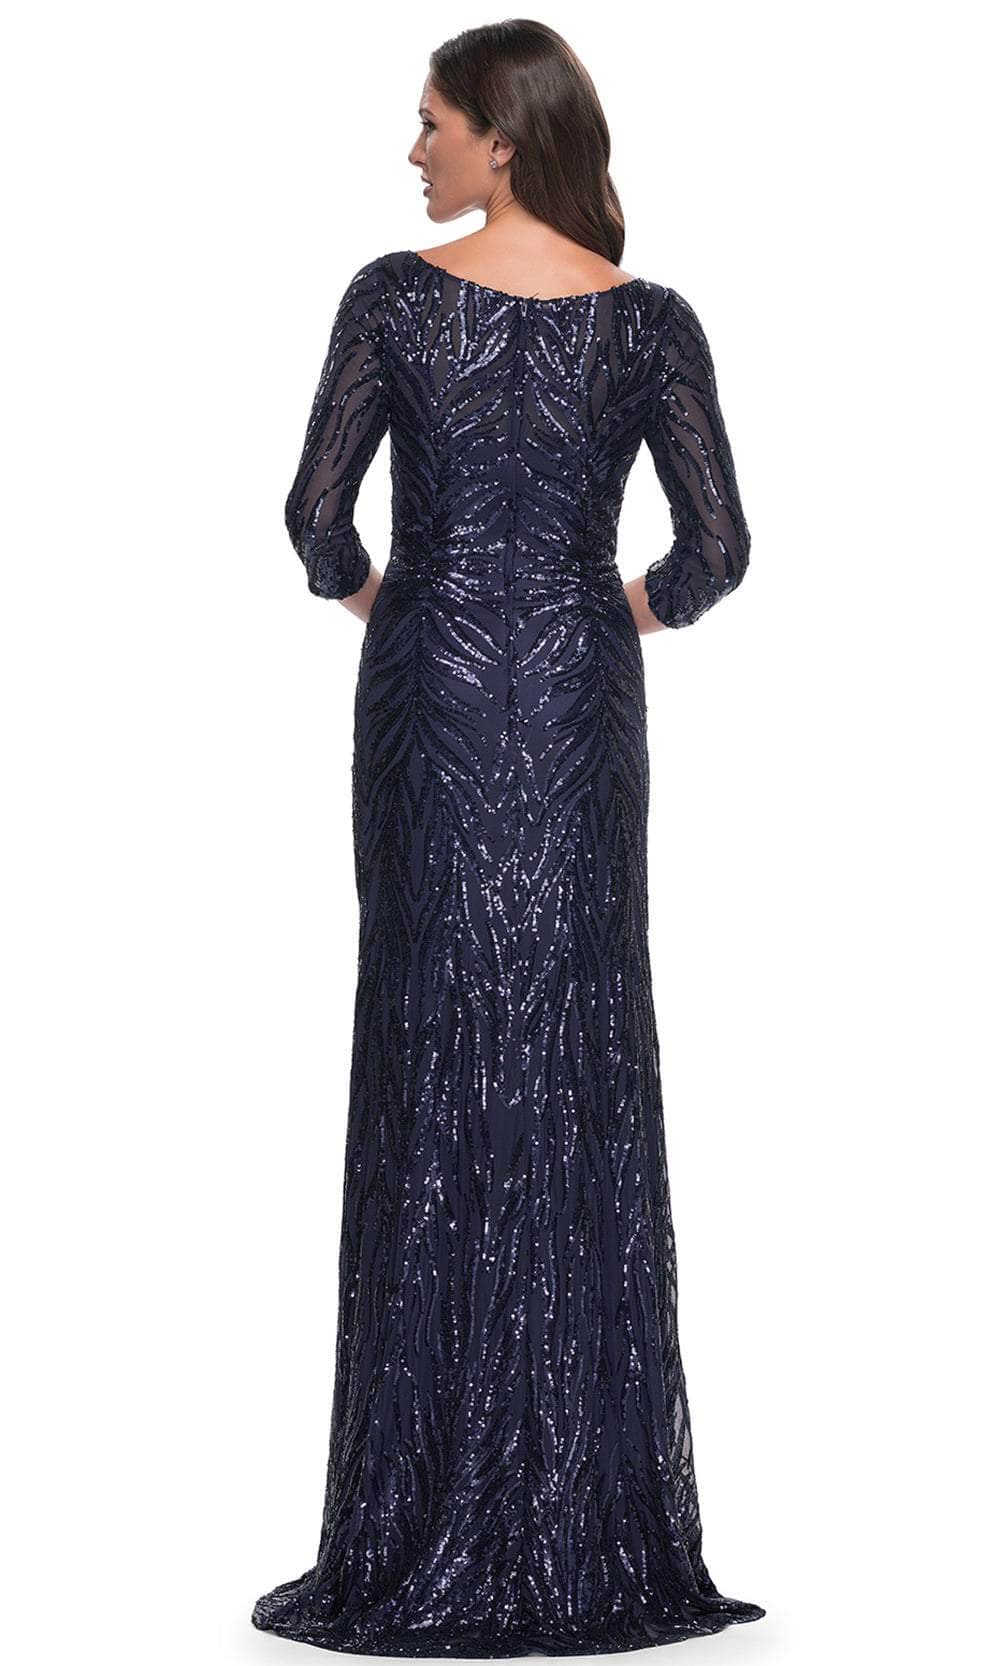 La Femme 30807 - Sequin Bateau Formal Dress Mother of the Bride Dresses